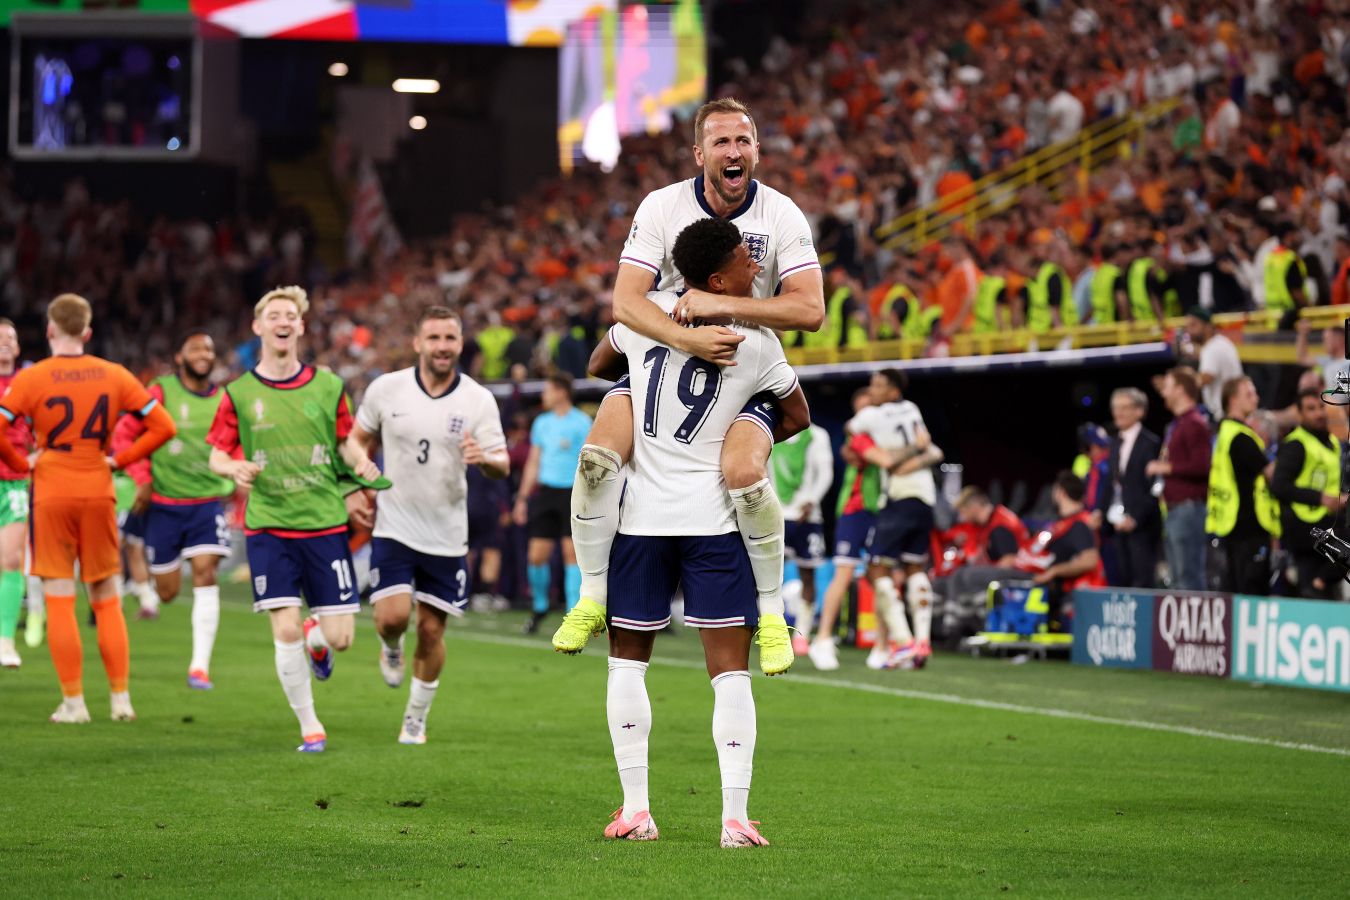 Статистика автора победного гола Англии Уоткинса в матче с Нидерландами на Евро